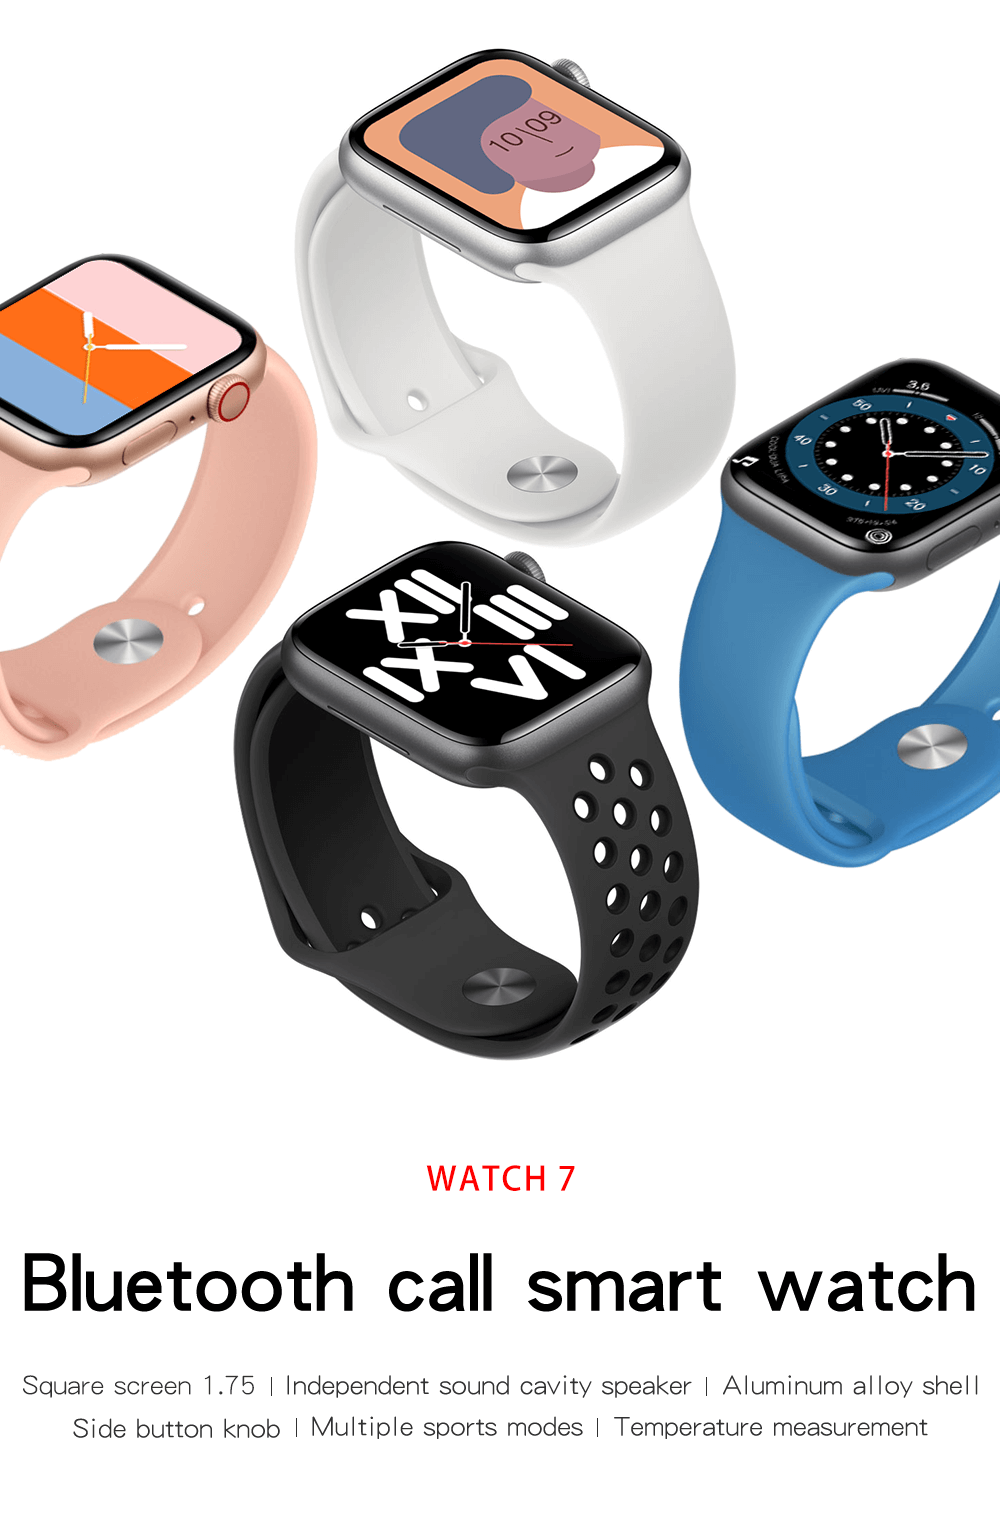 Smartwatch Premium Calitate Garantata Design Aparte Multitudine de Functii Inteligente Watch 7 11